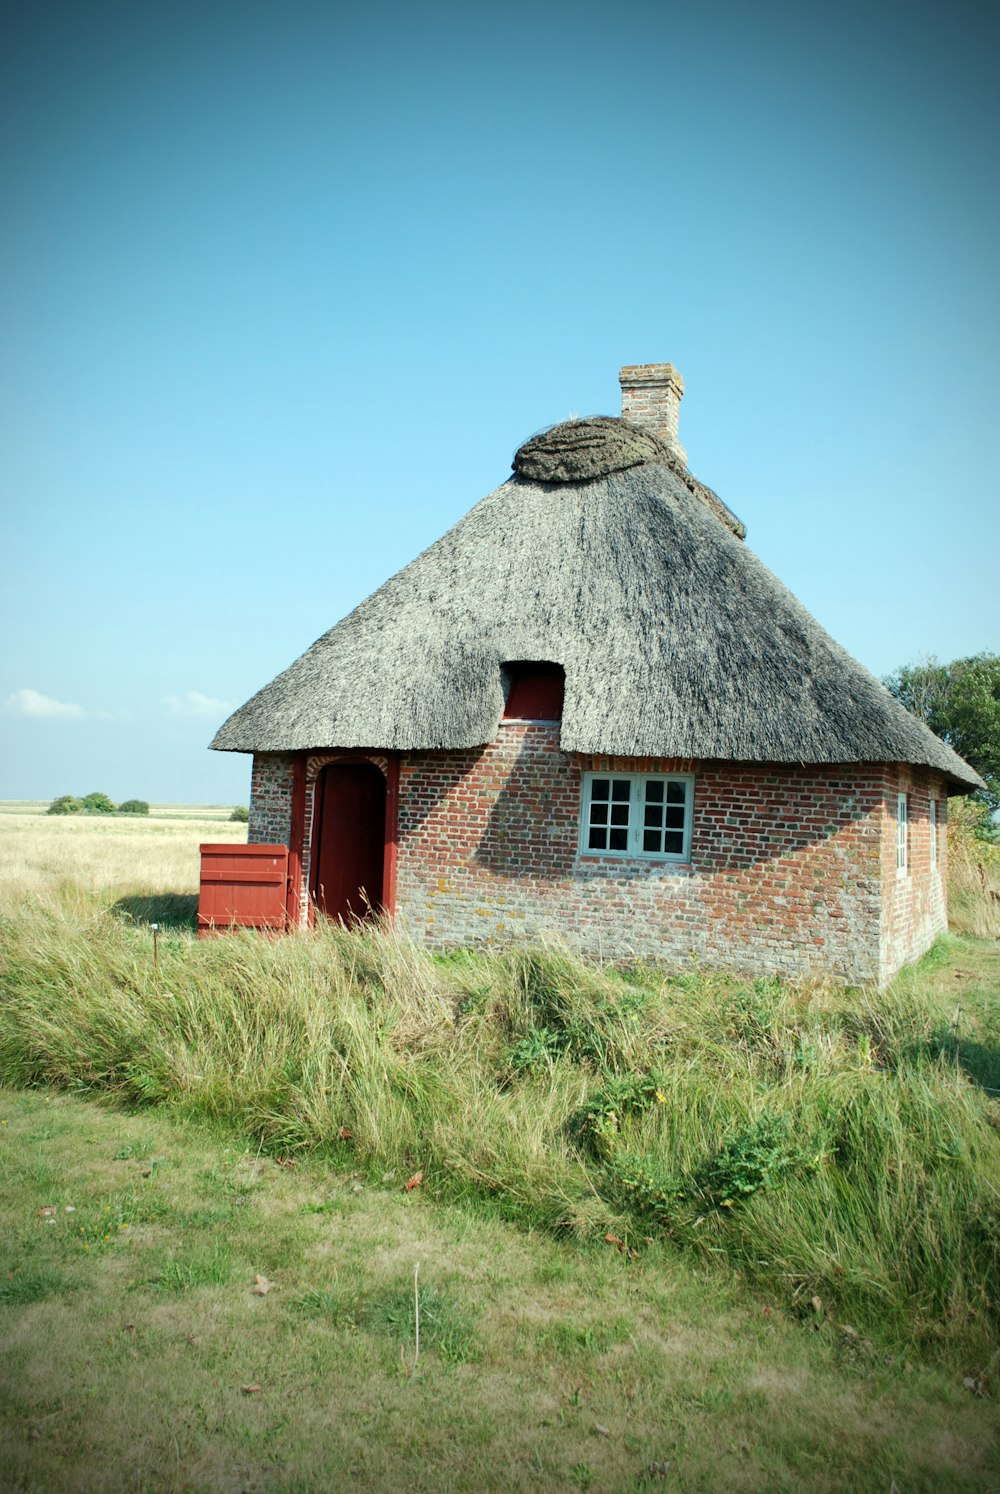 a brick house in a grassy field